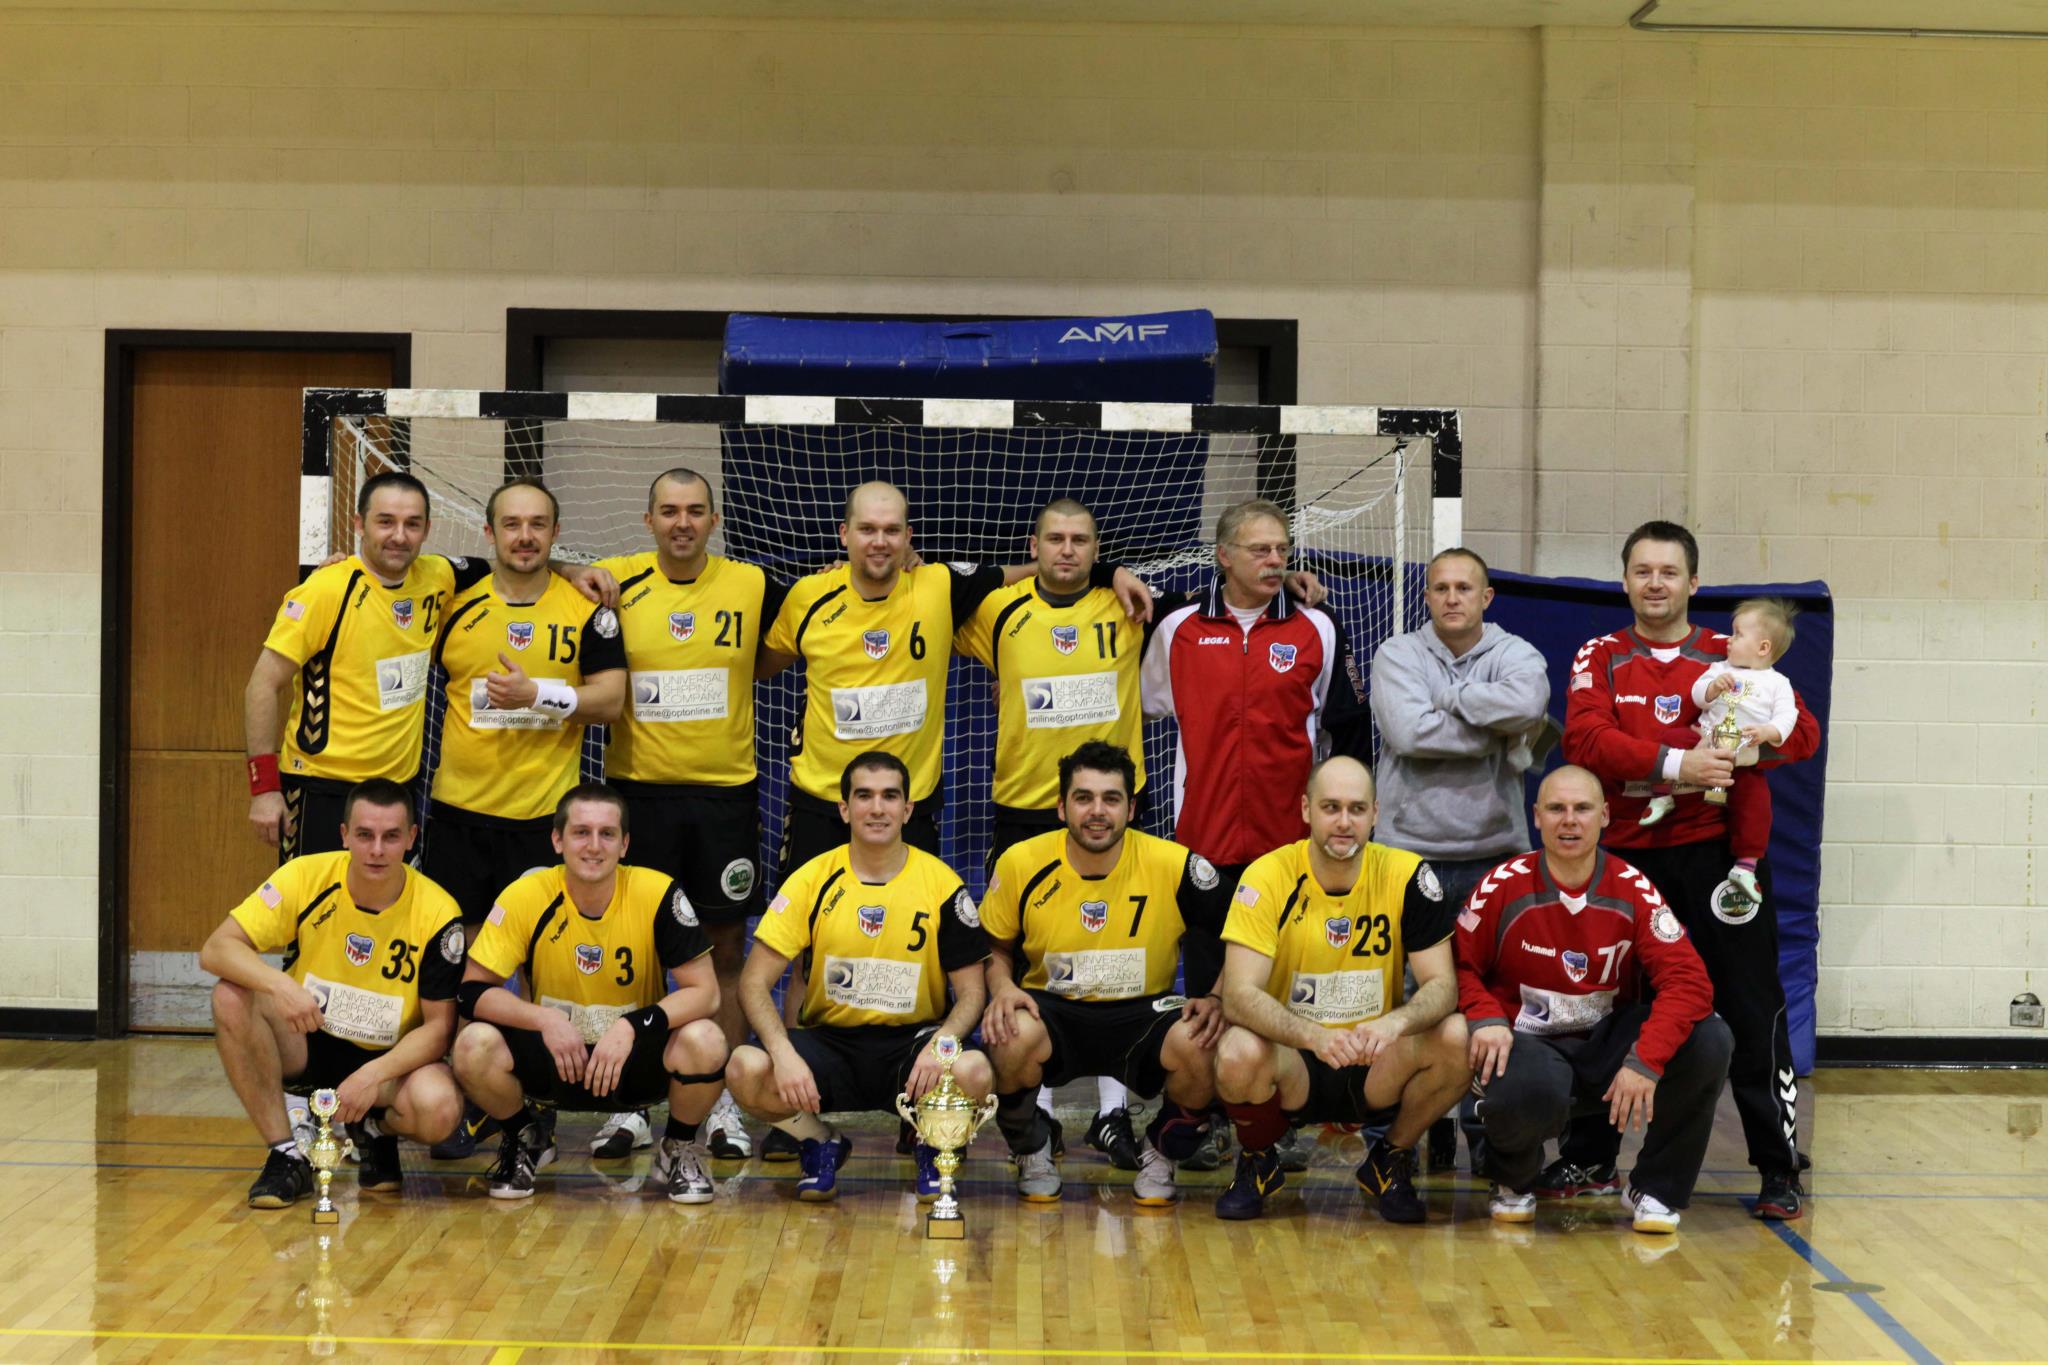 Chicago Inter "Black" wins the 2011 Michael Lipov Handball Tournament